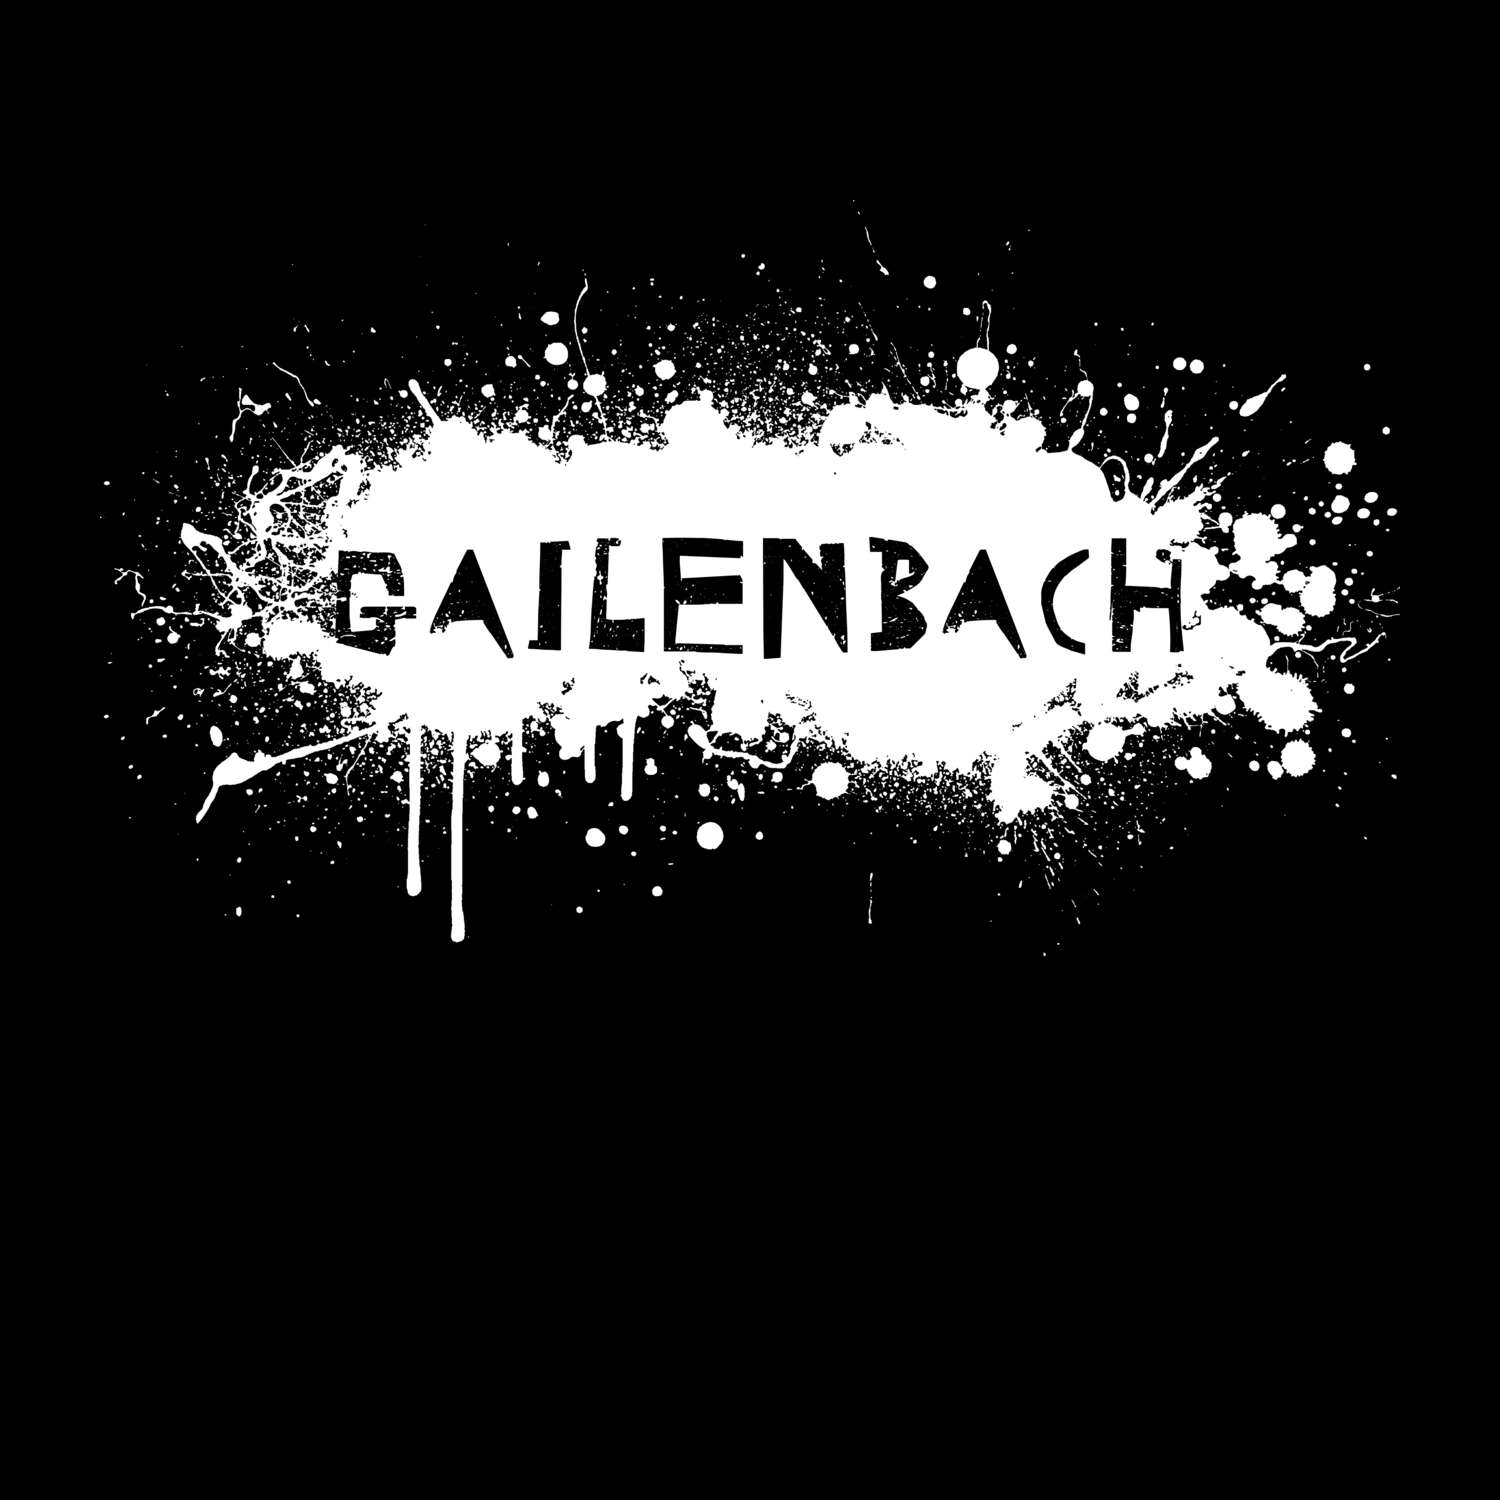 Gailenbach T-Shirt »Paint Splash Punk«